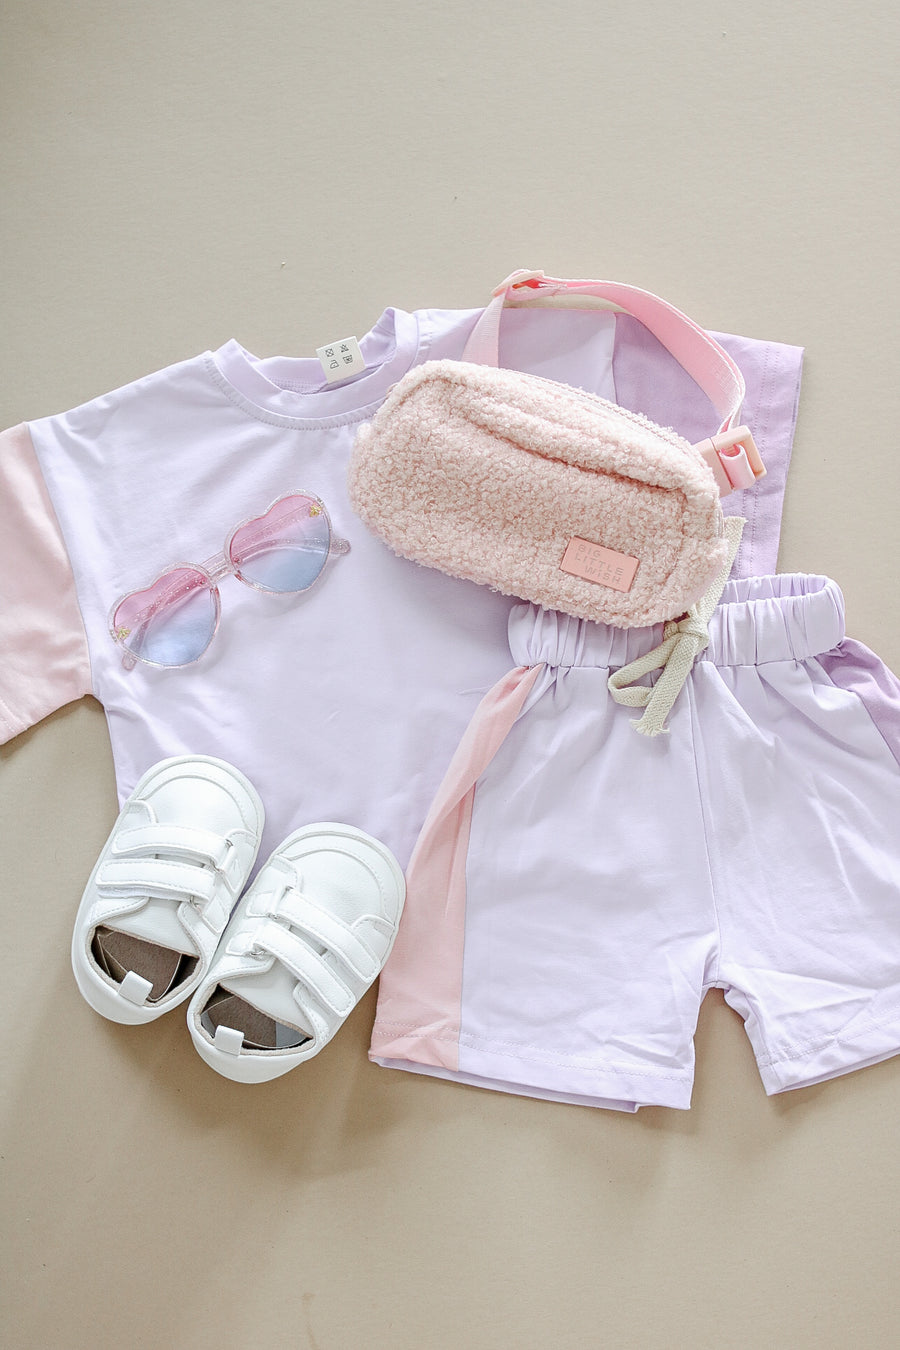 Sally | Color Block Tee Shirt + Shorts Set - Pink